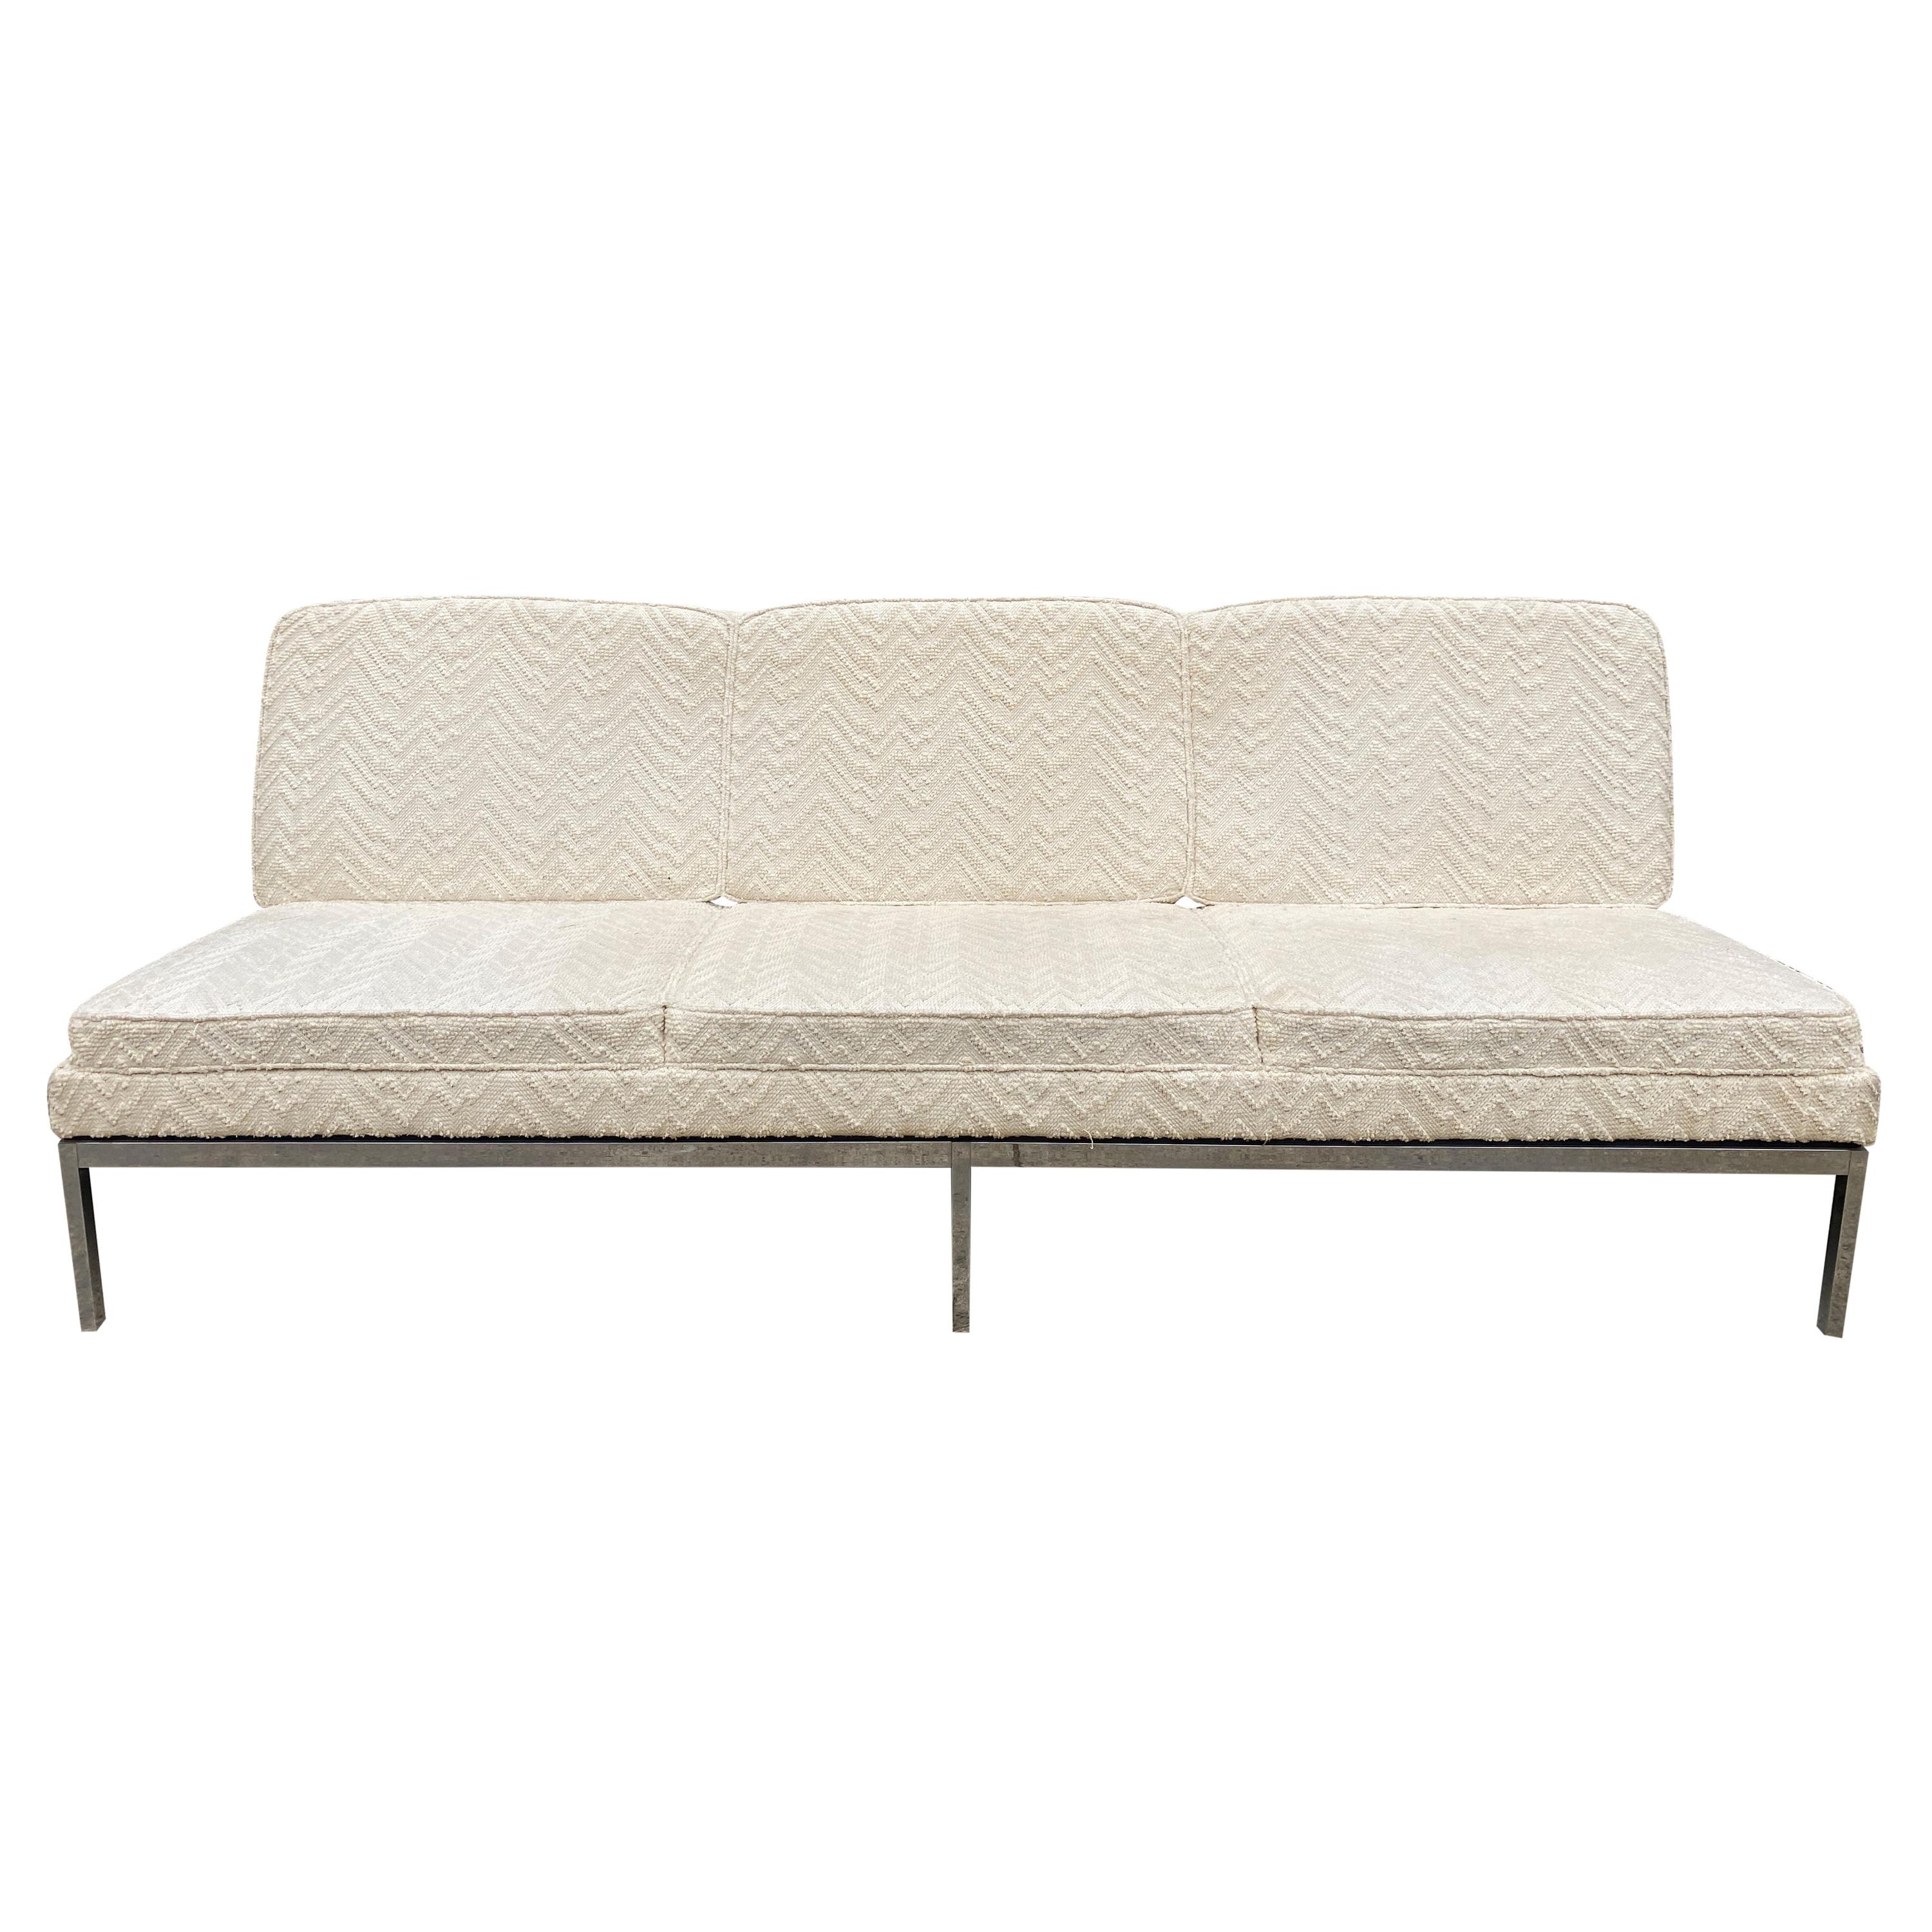 Mid-Century Modern Original Florence Knoll Loveseat 3-Seat Sofa Chenille